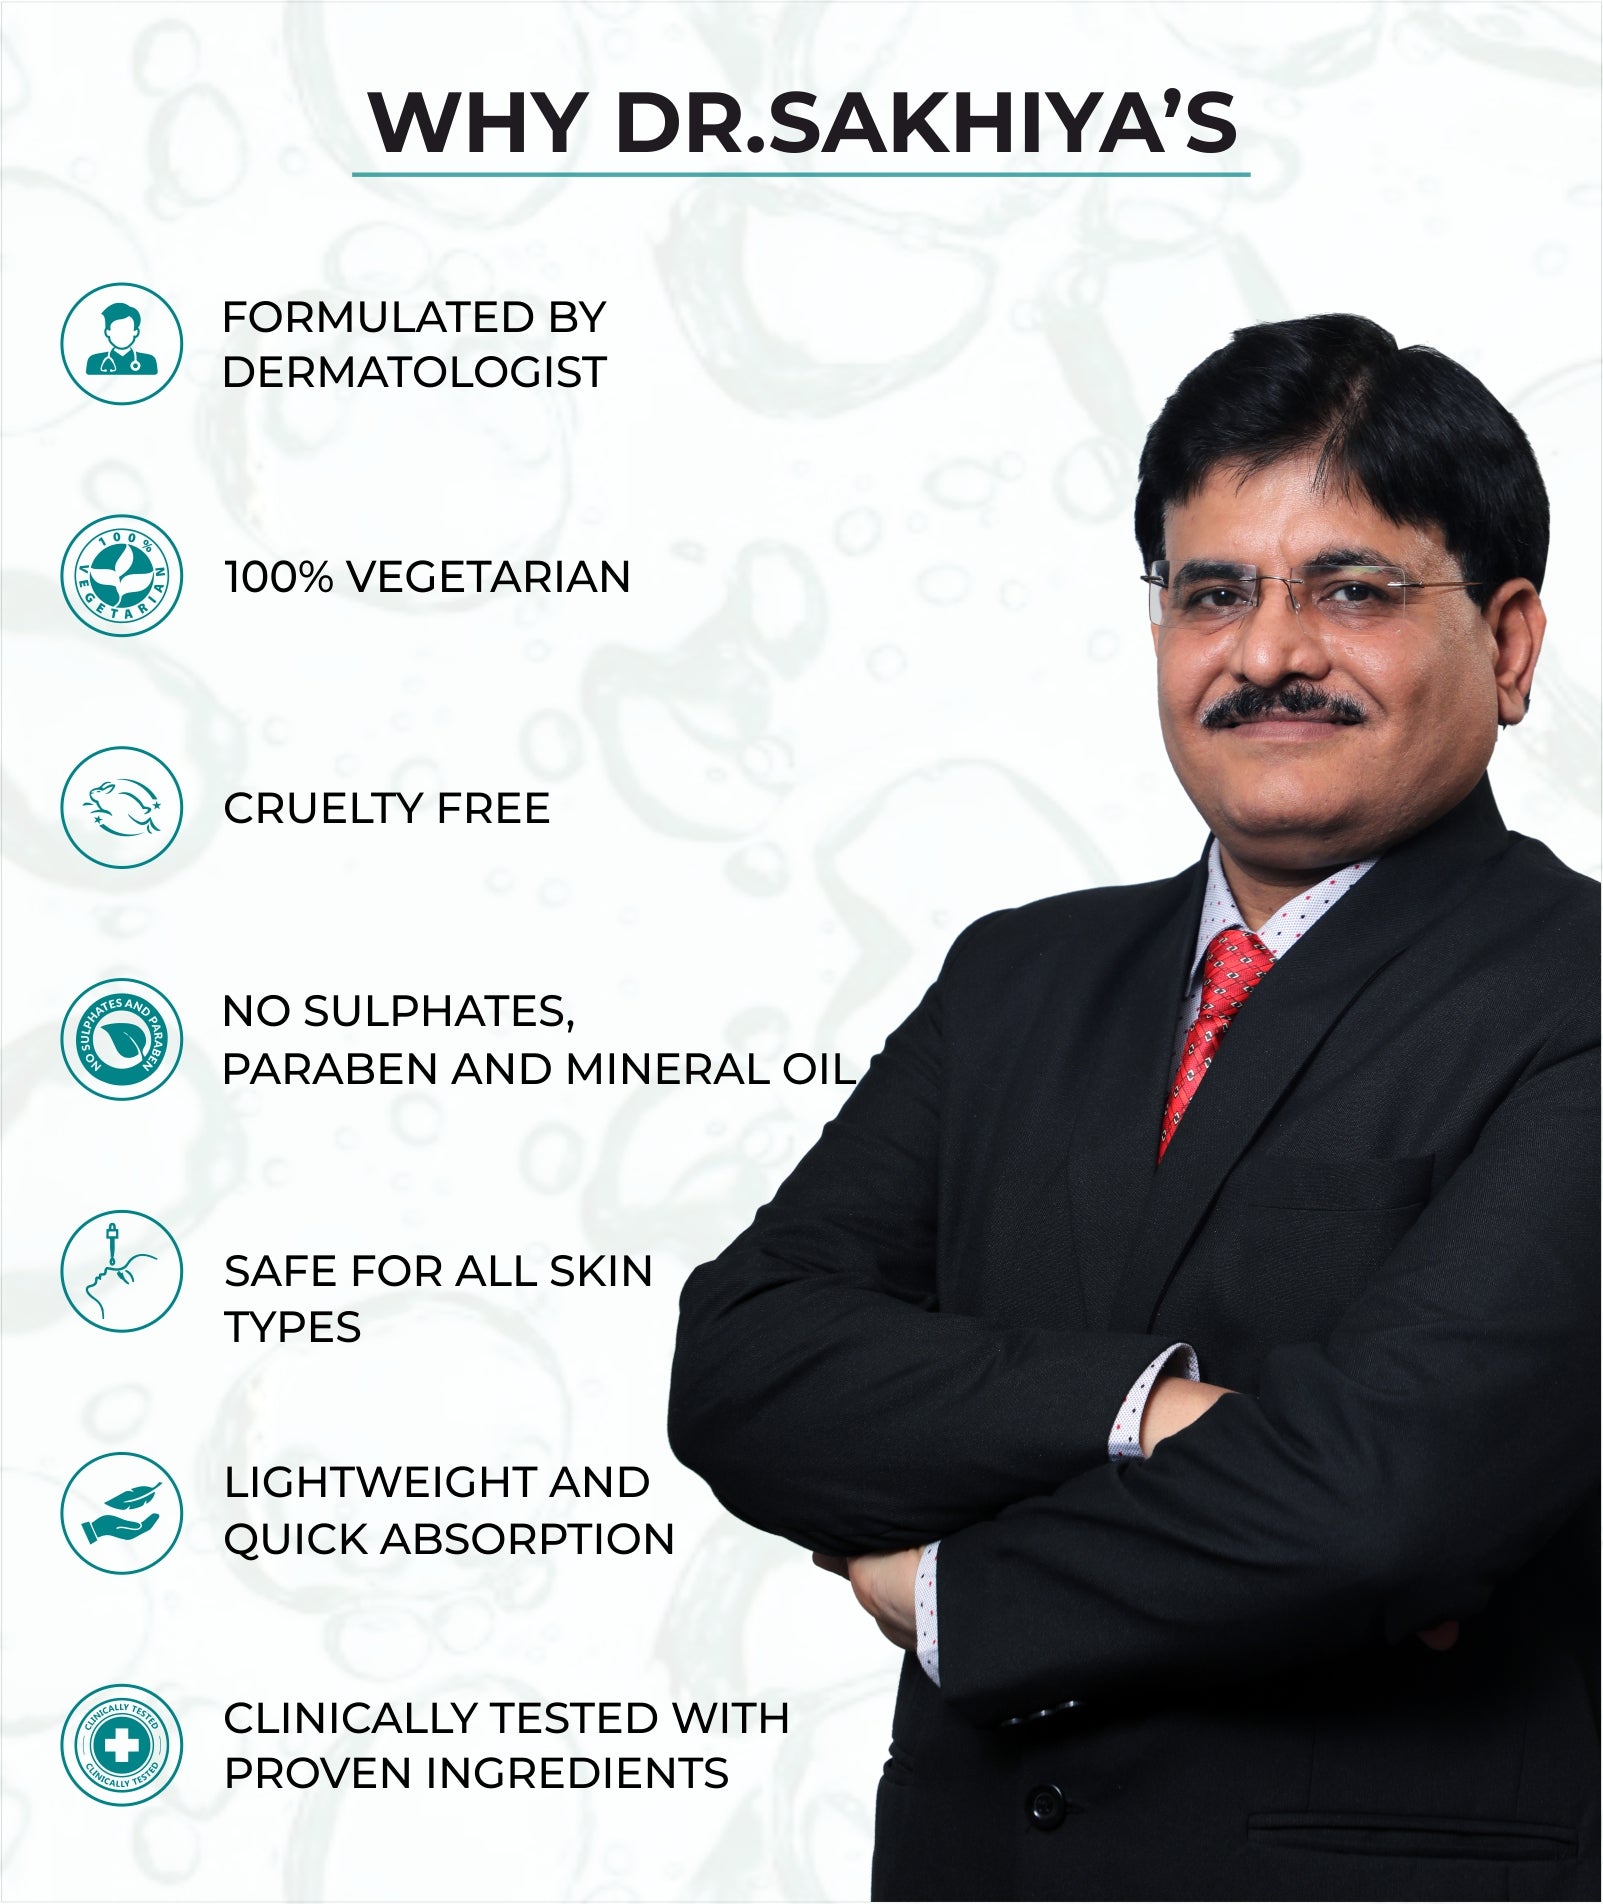 Why you should choose Dr Sakhiya's dermatologically formulated products